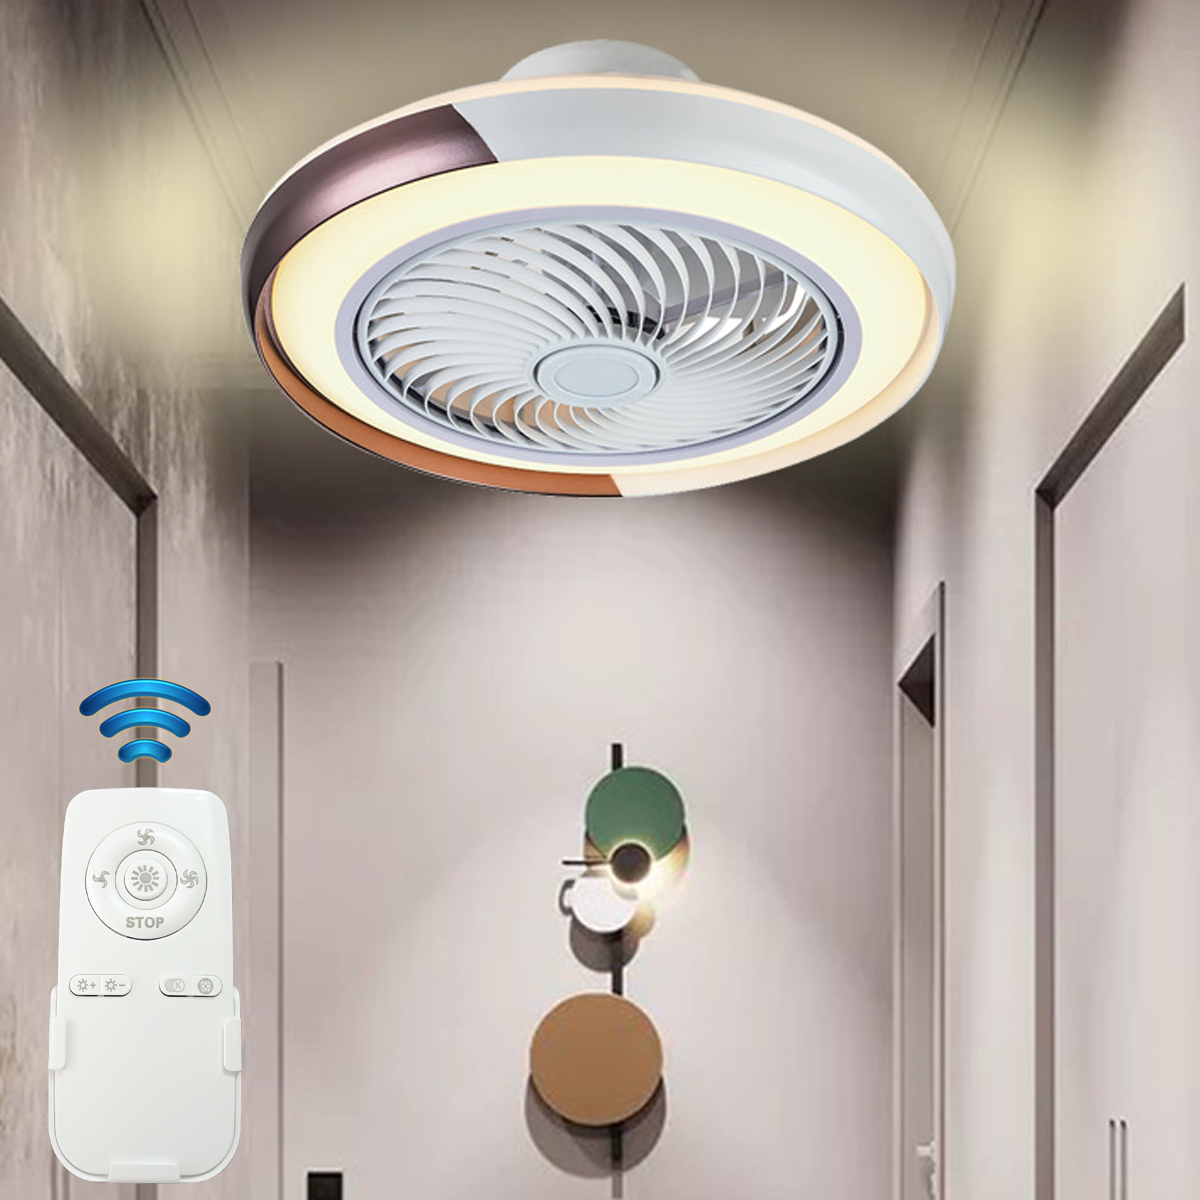 LED-Fan-Ceiling-Light-WiFi-Dimmable-Bedroom-Lamp-APPRemote-Control-220V-1861721-11